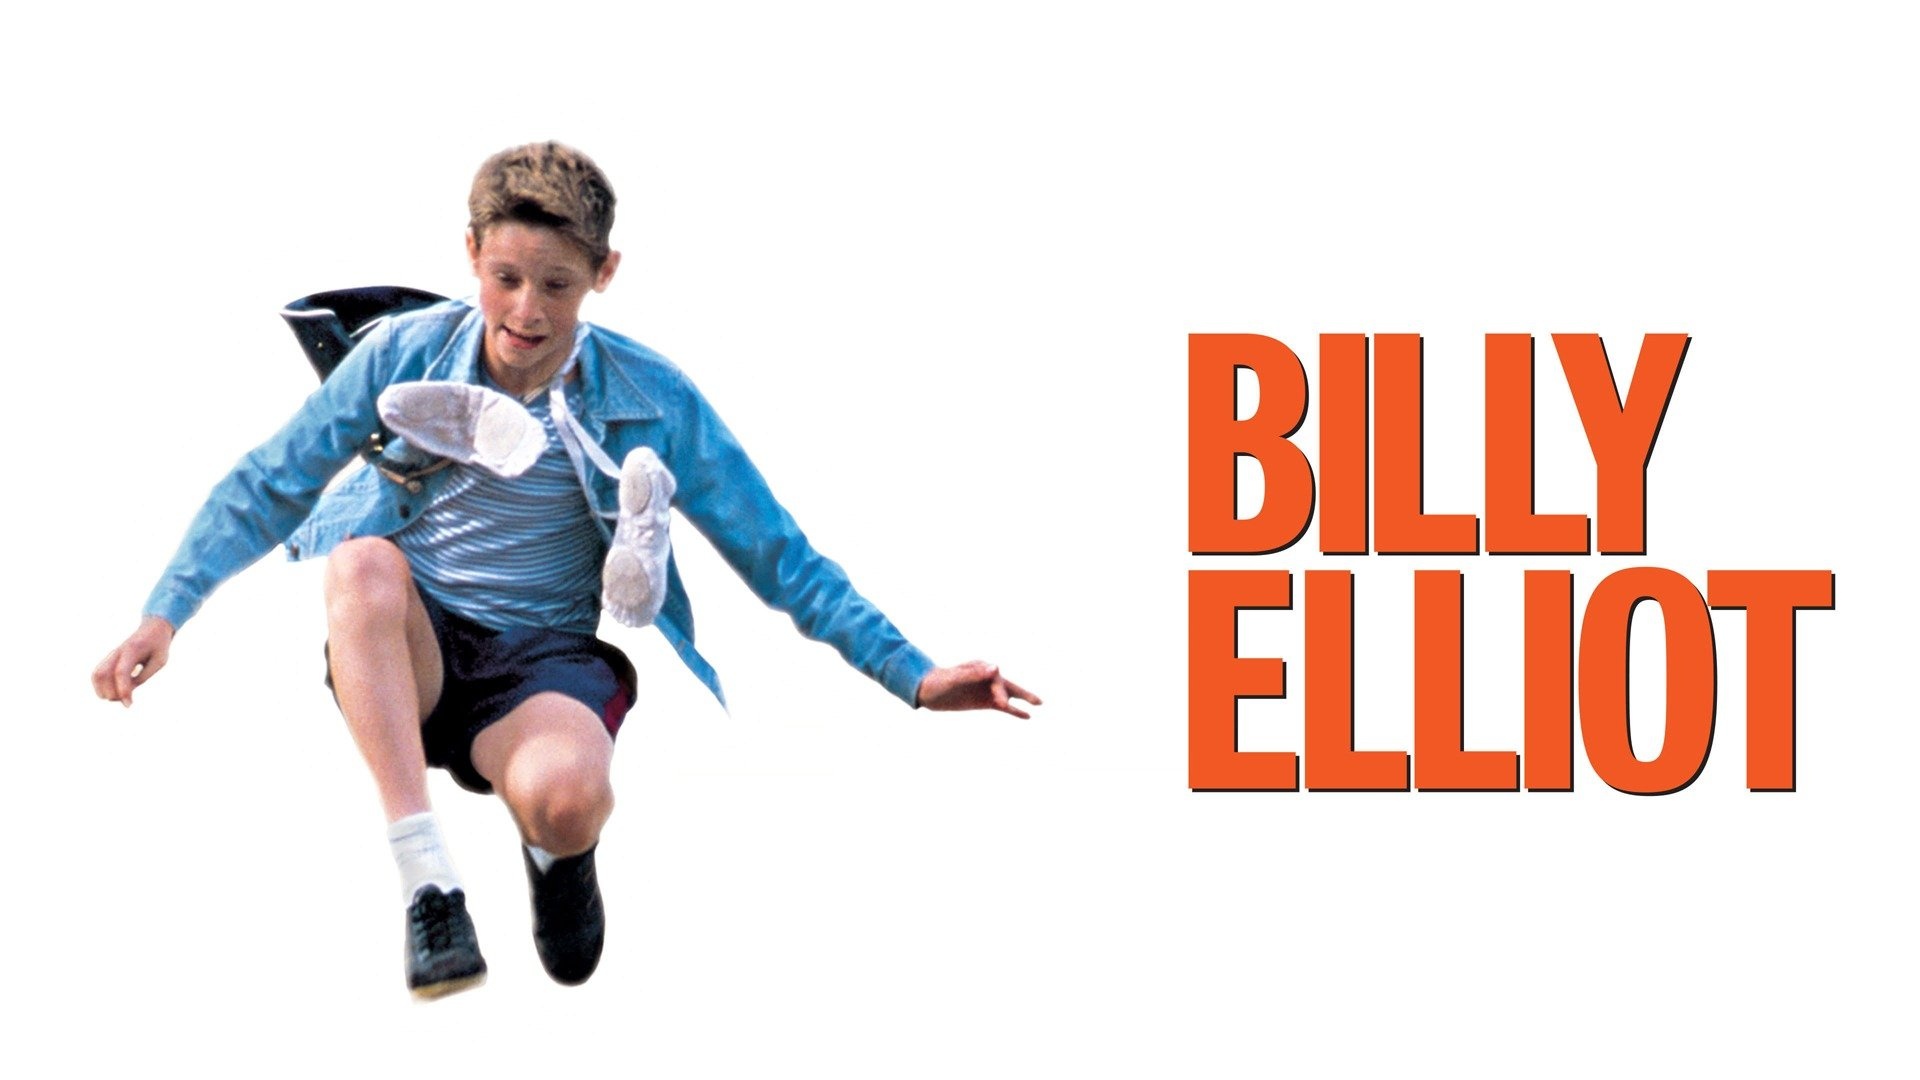 Billy Elliot movie, Ballet prodigy, Pursuing dreams, Heartwarming story, 1920x1080 Full HD Desktop